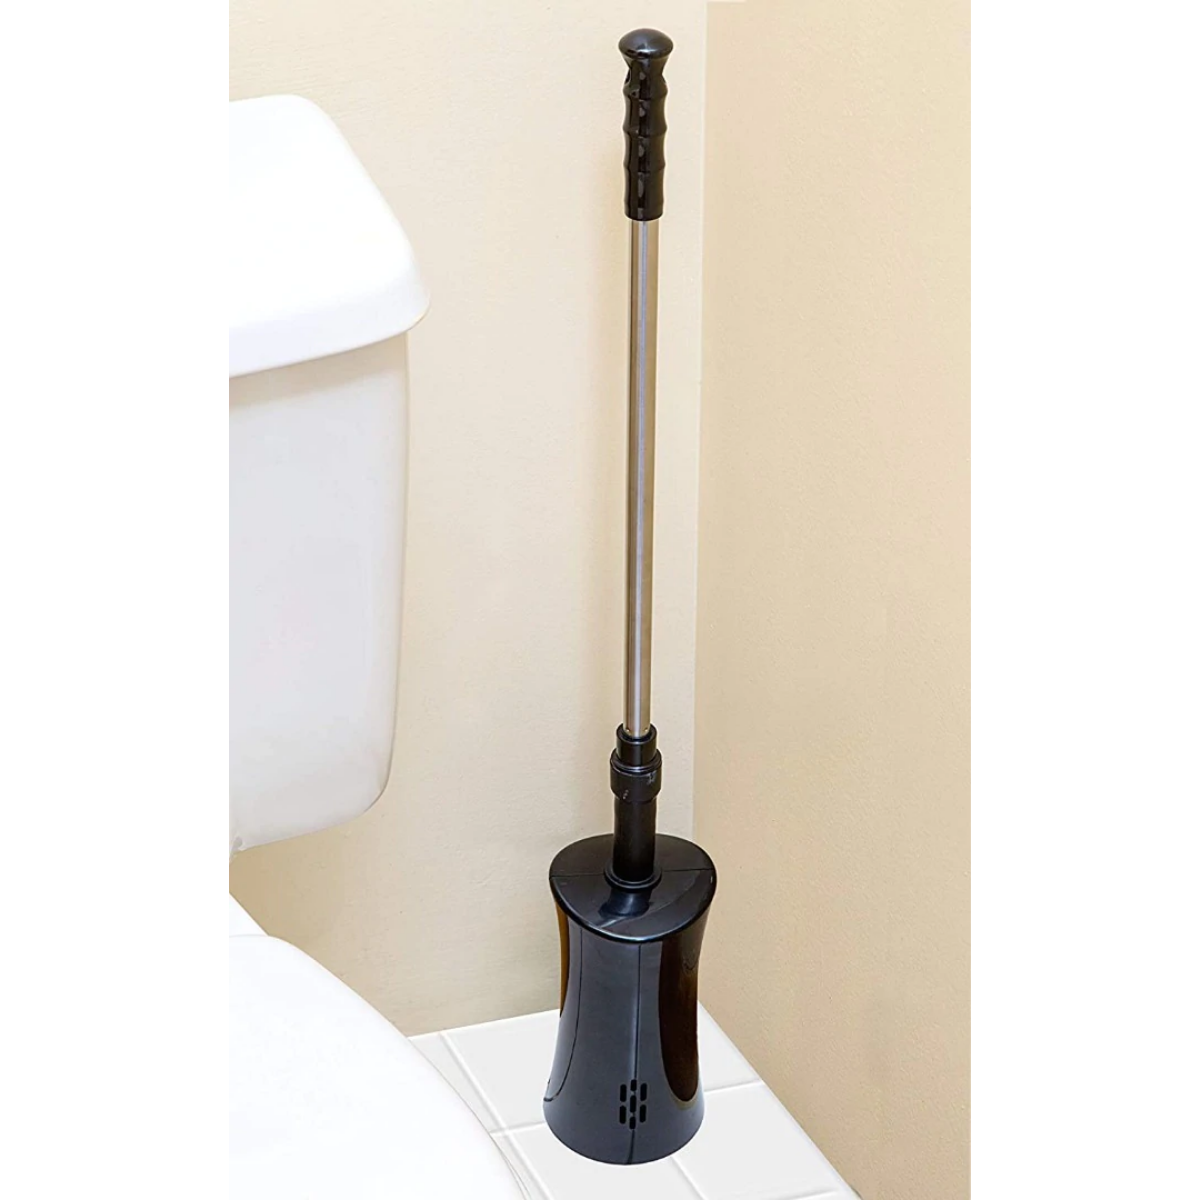 ToiletShroom Revolutionary Plunger